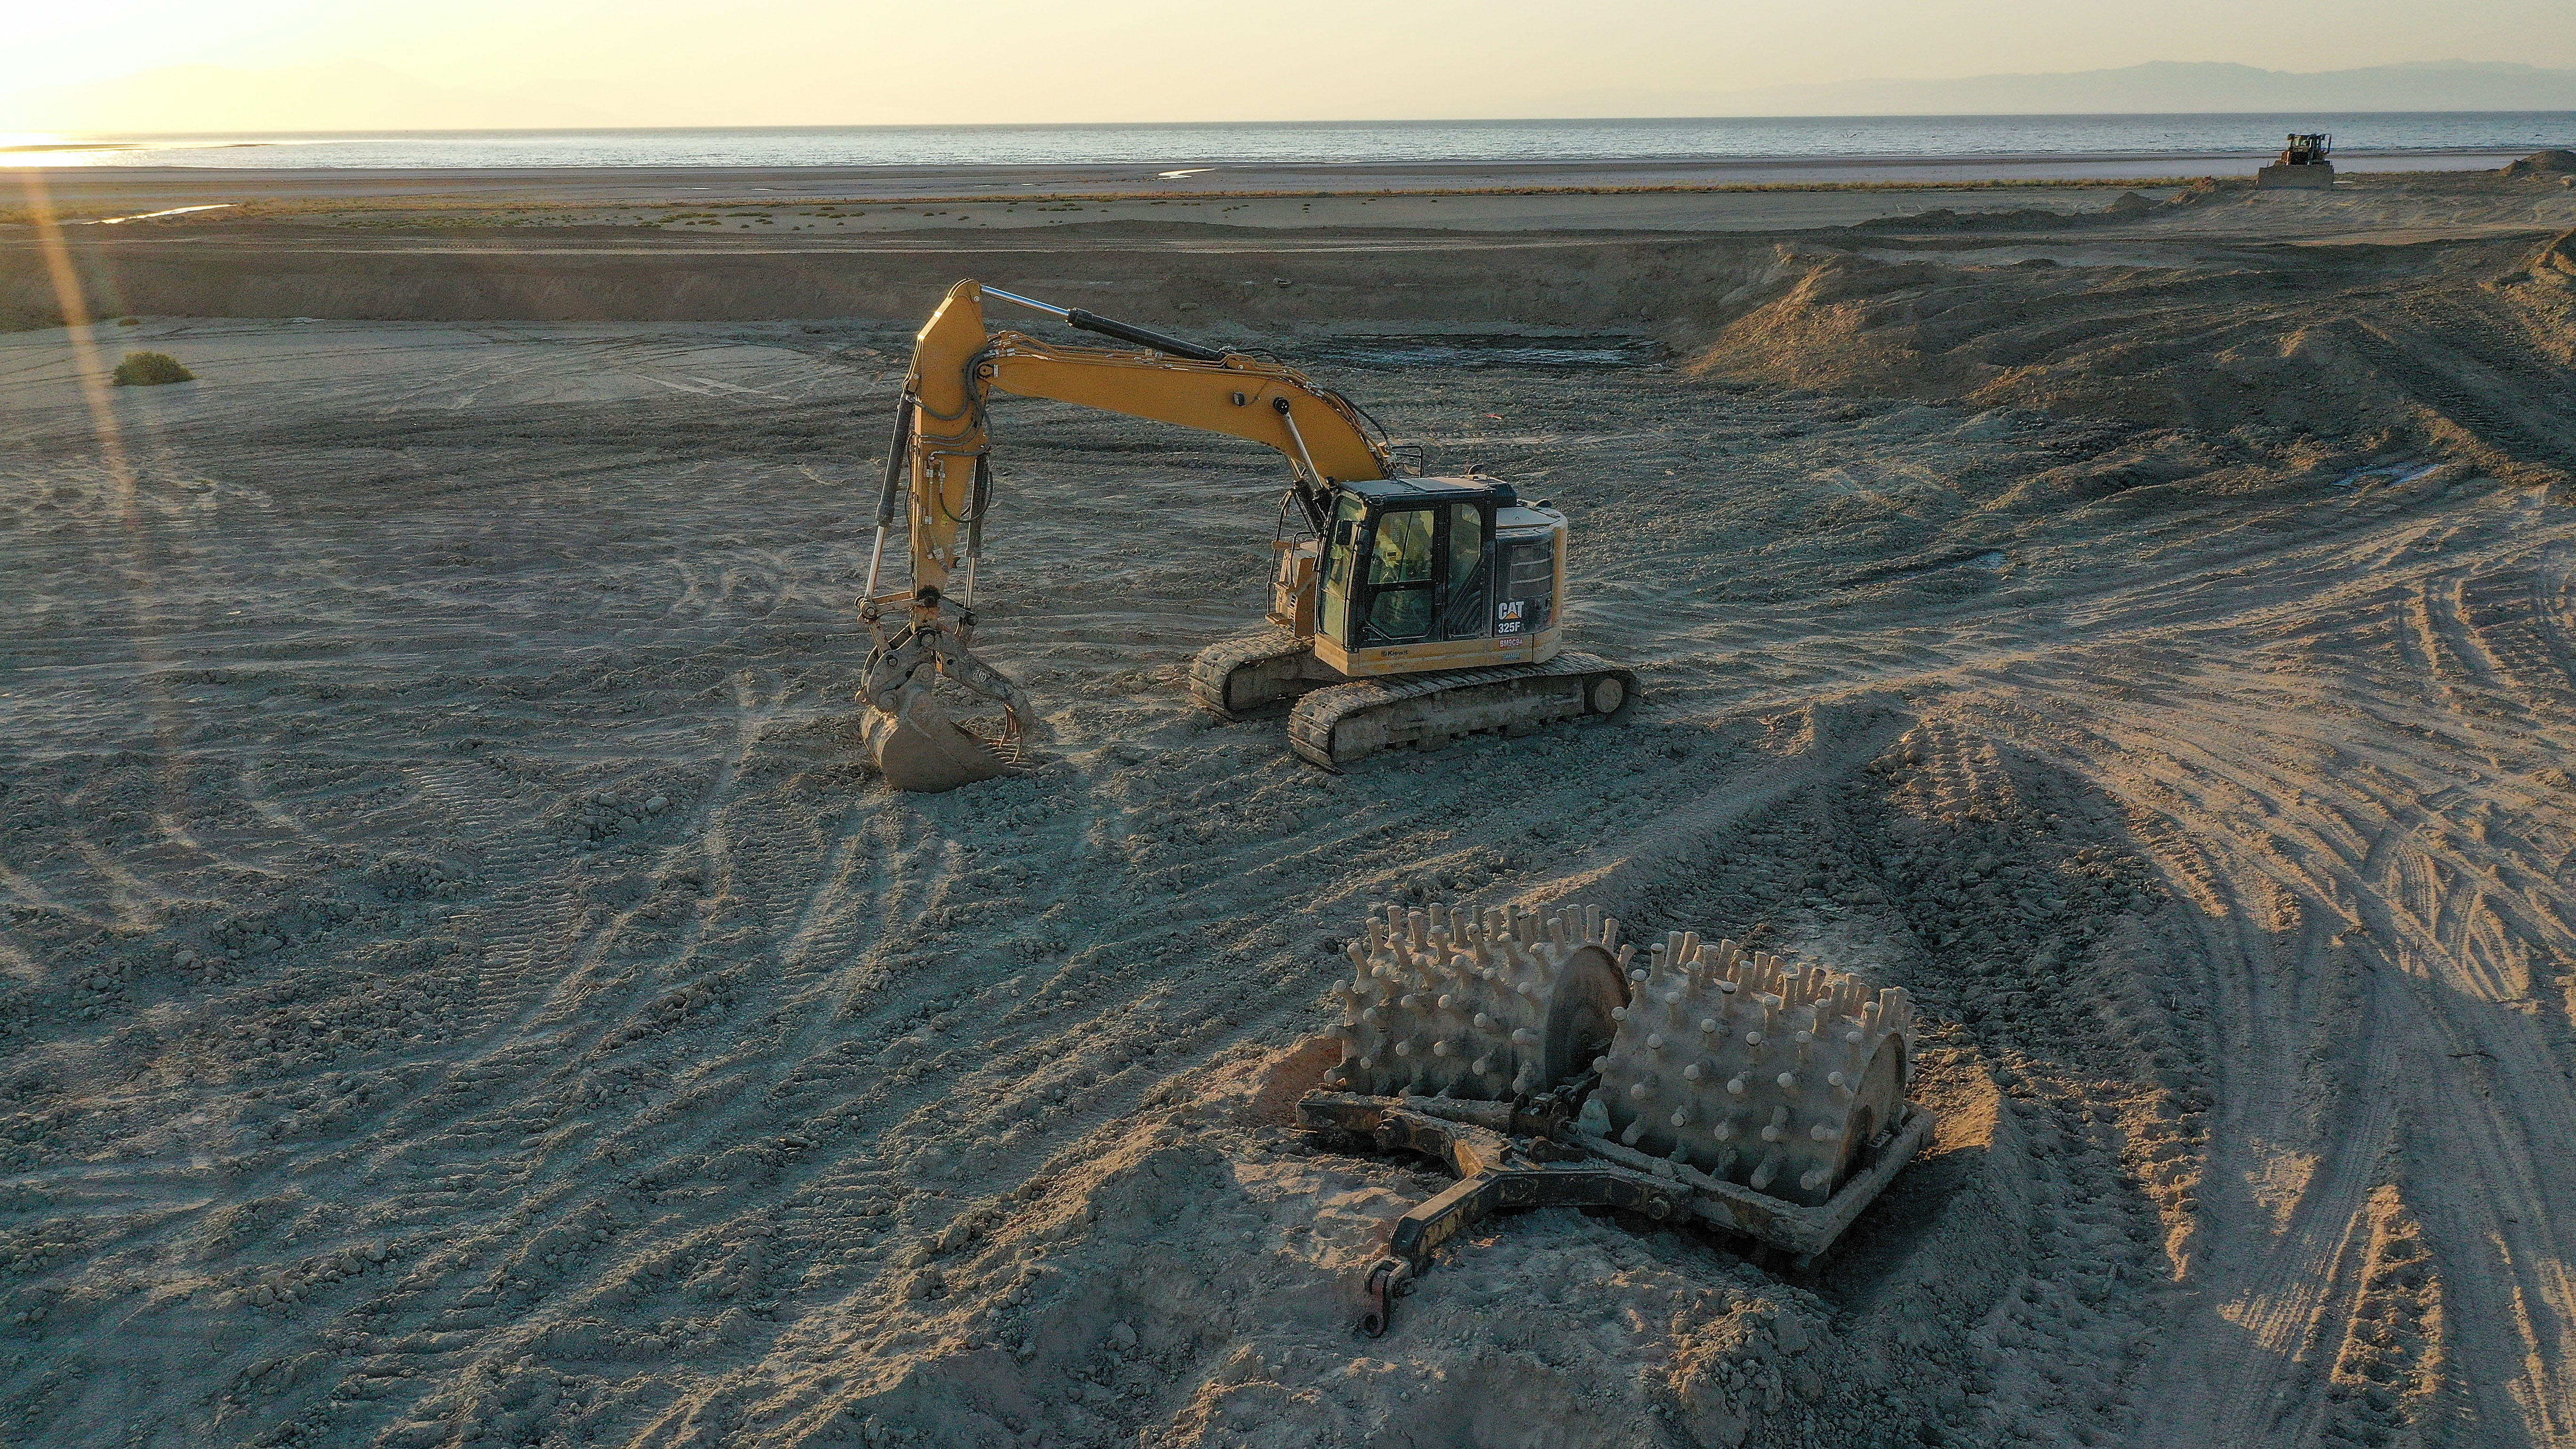 Salton Sea over 20 years: Jay Calderon photo show how land transformed